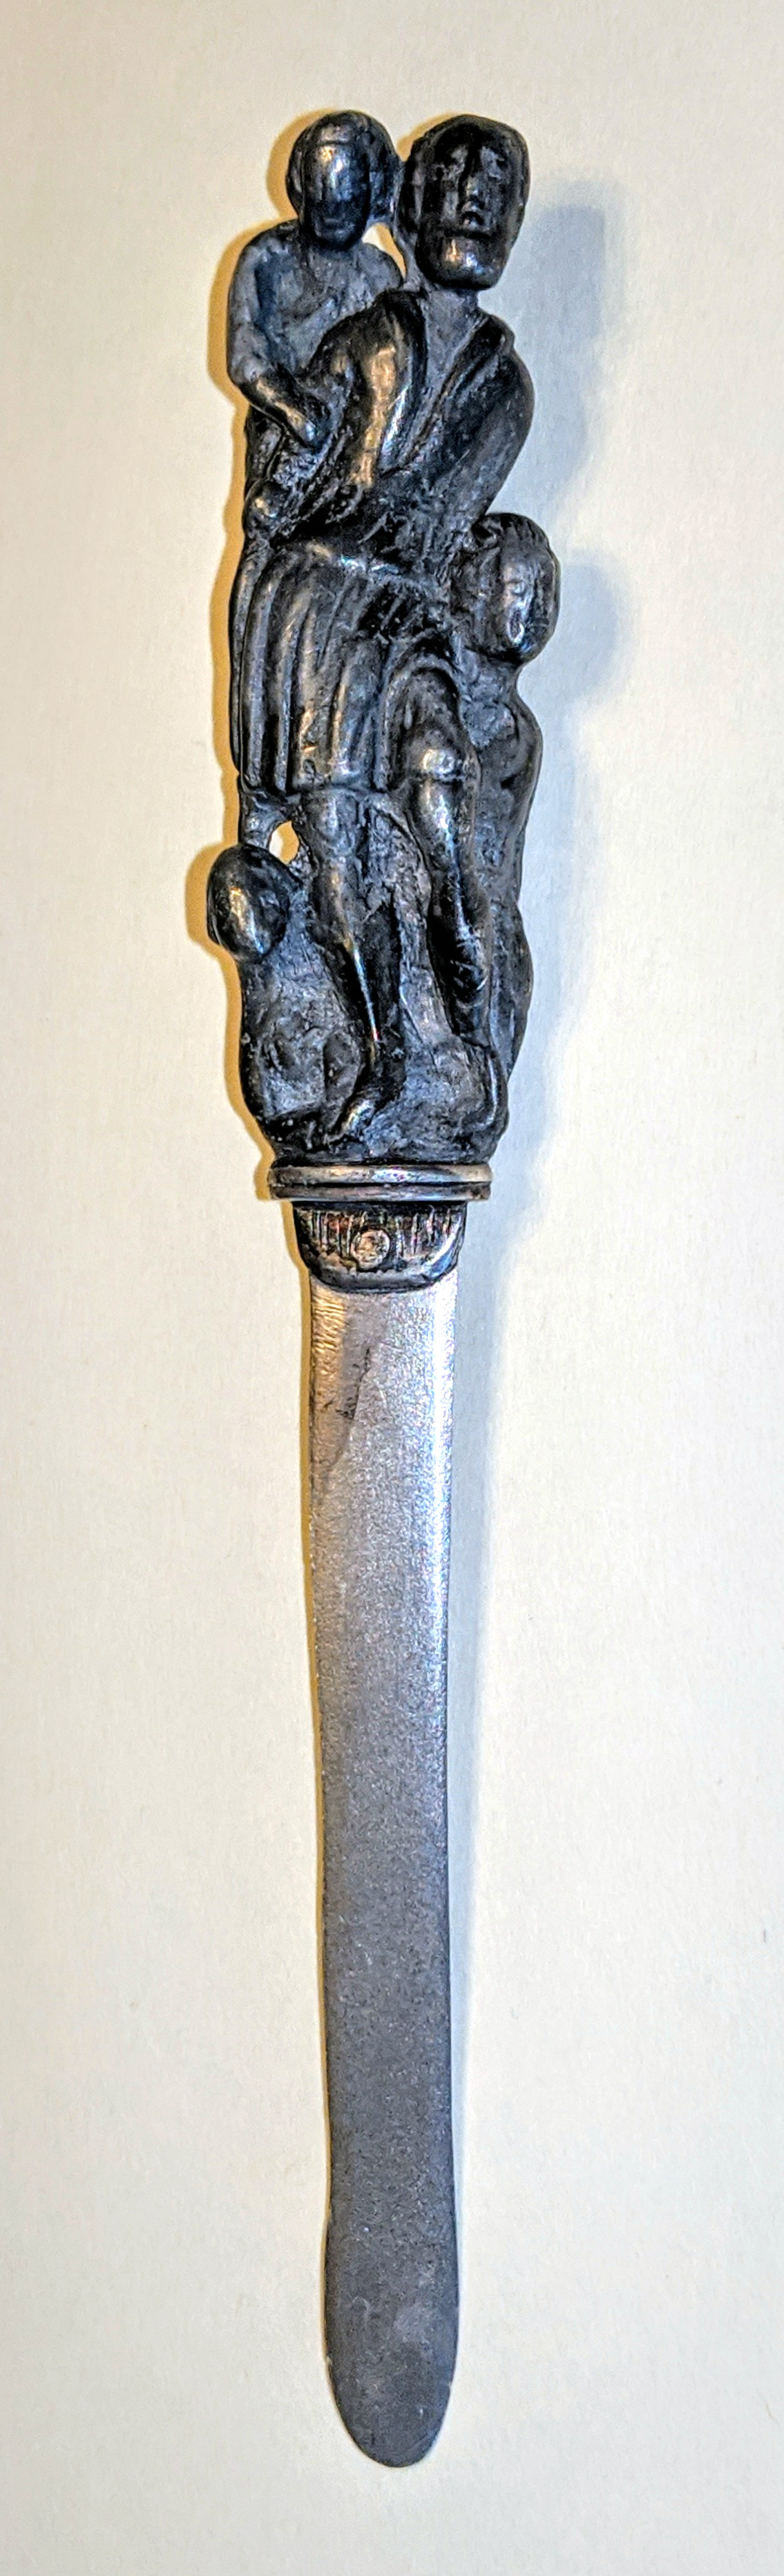 Binding of Isaac circumcision knife